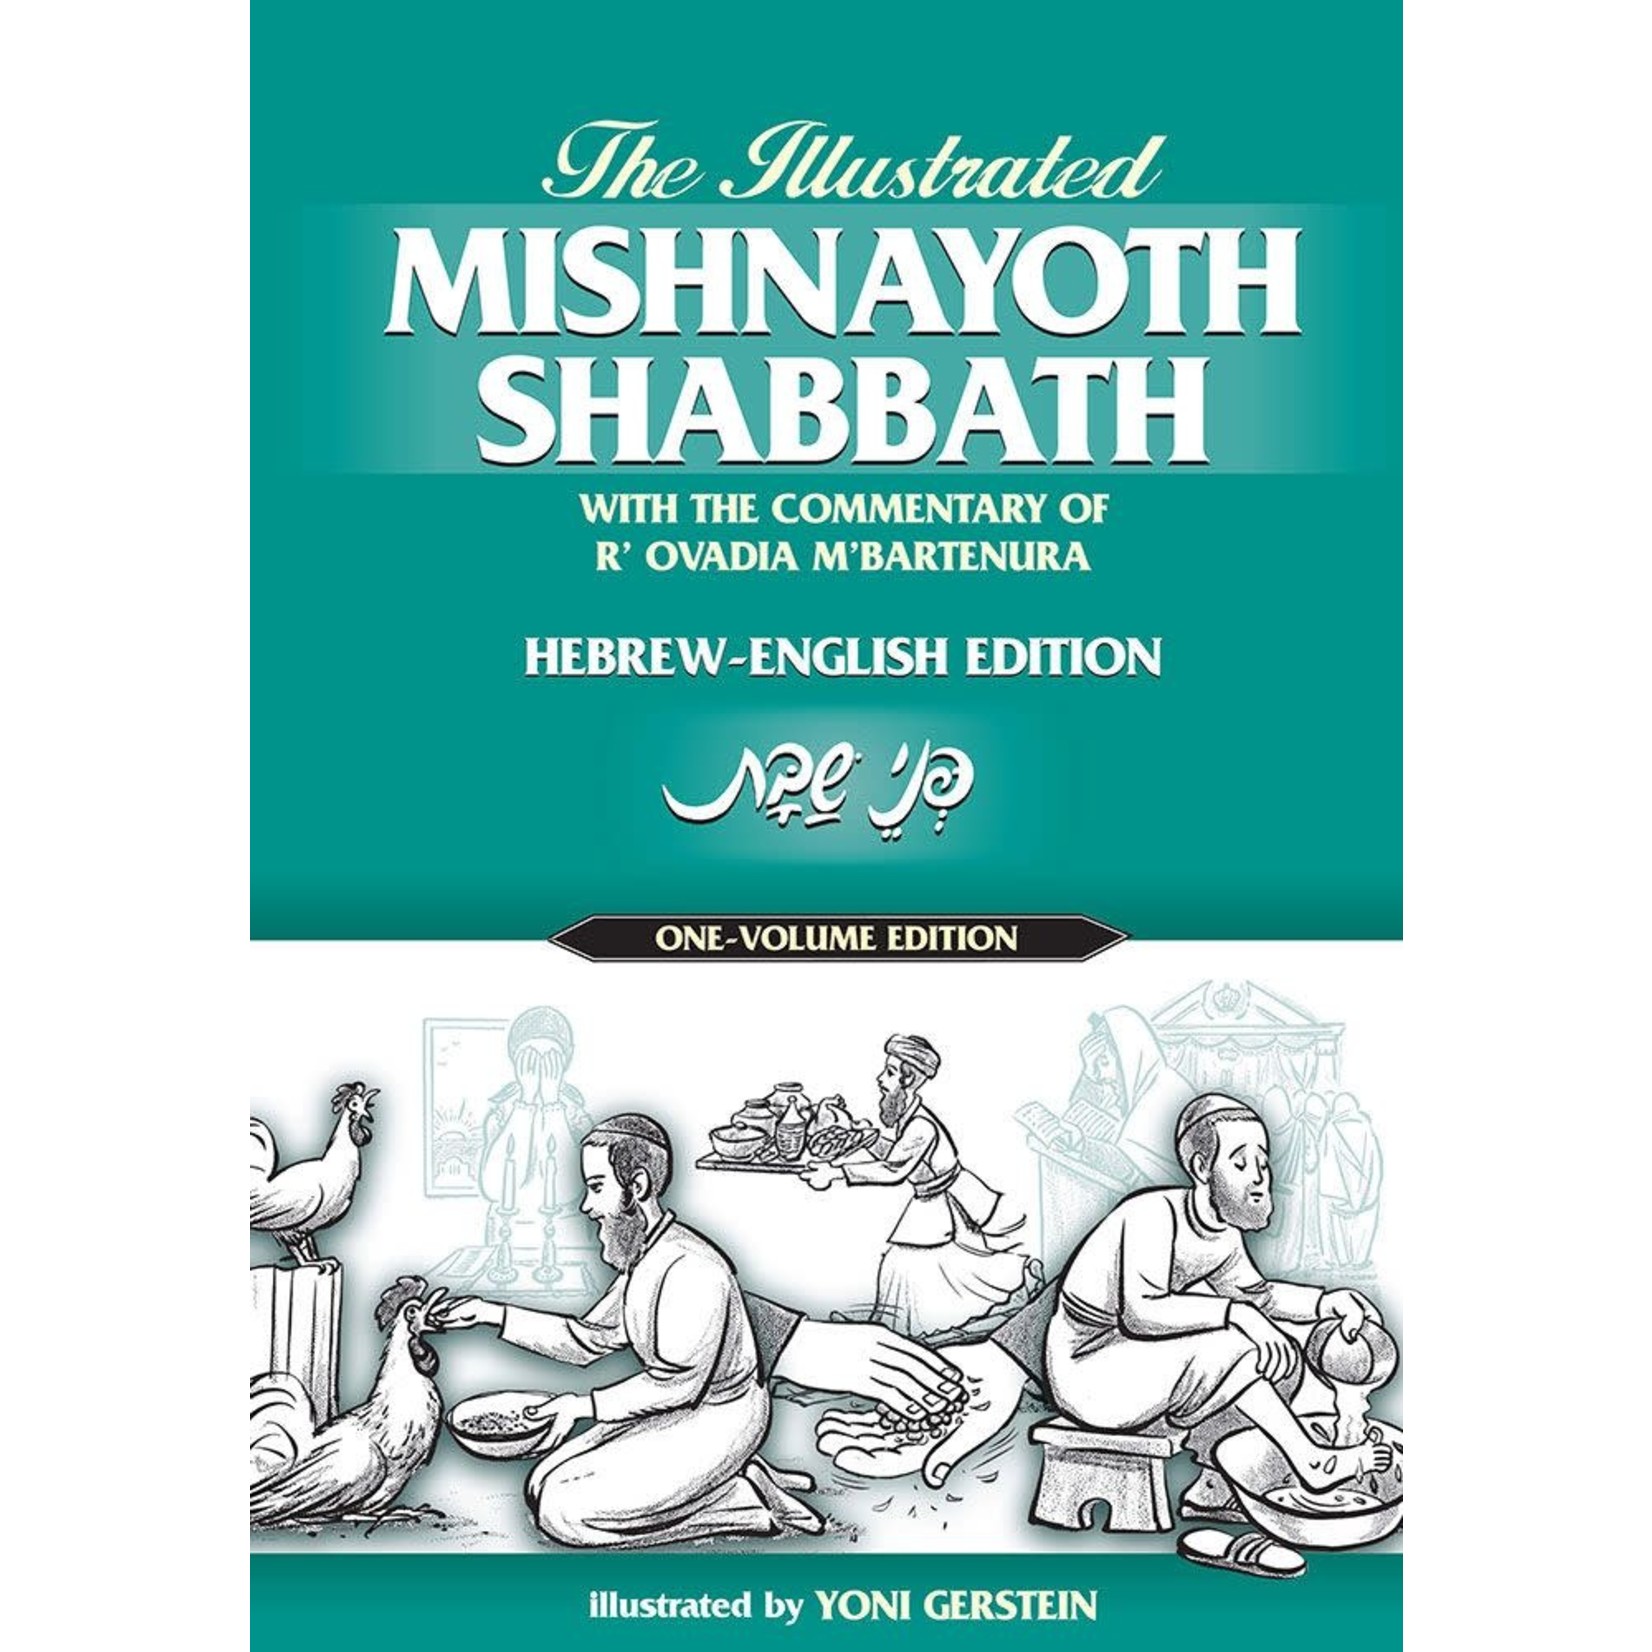 The Illustrated Mishnayoth Shabbath